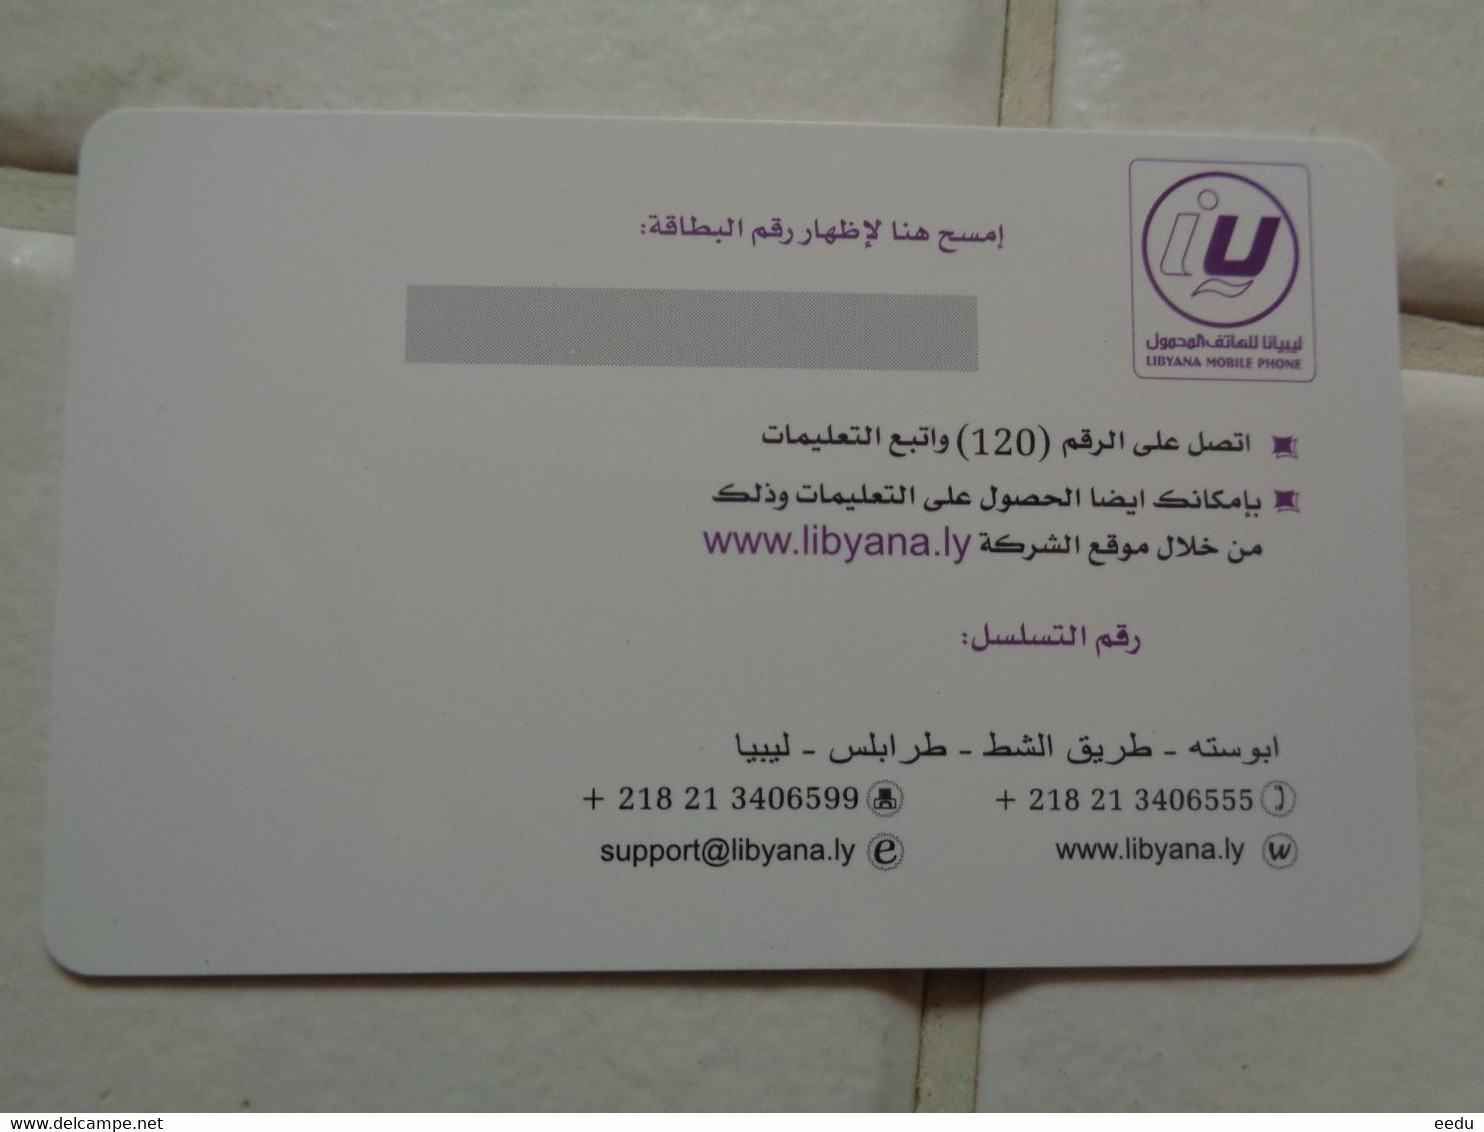 Libya Phonecard - Libië